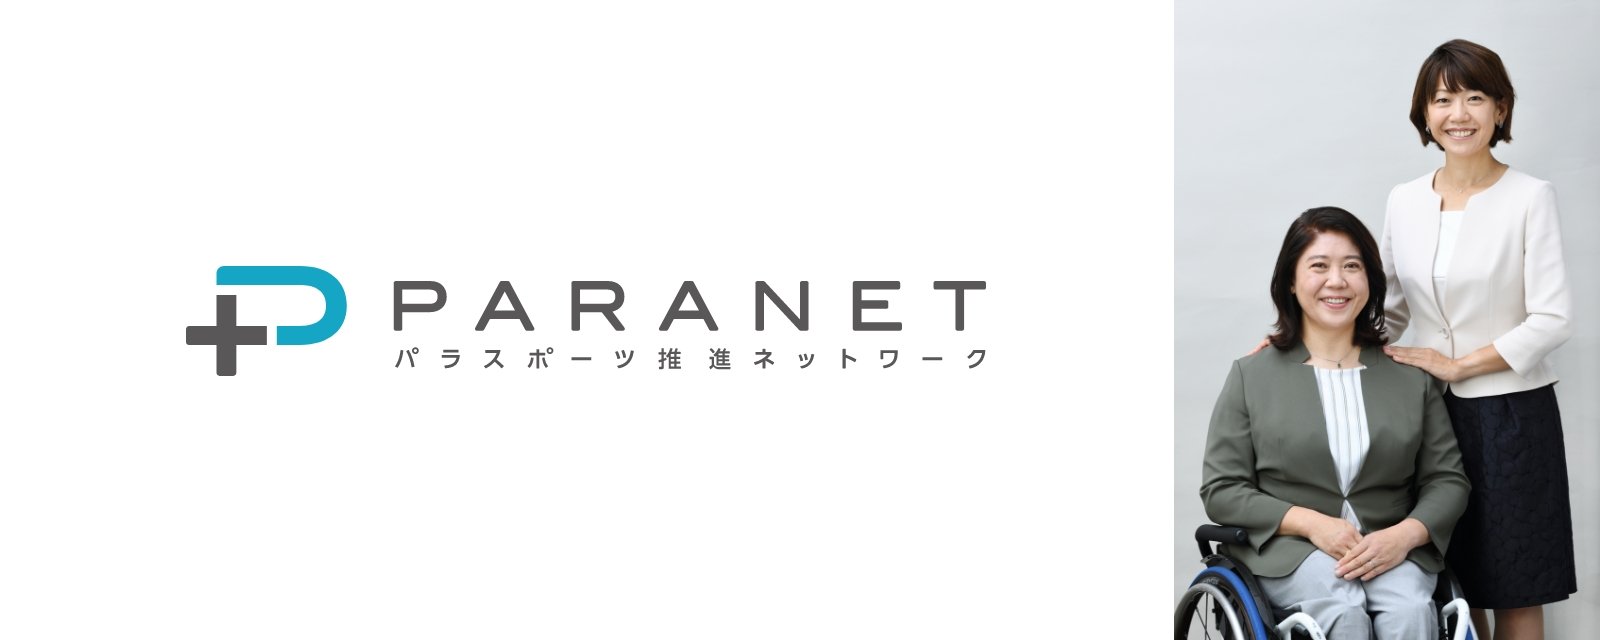 PARANET パラスポーツ推進ネットワーク